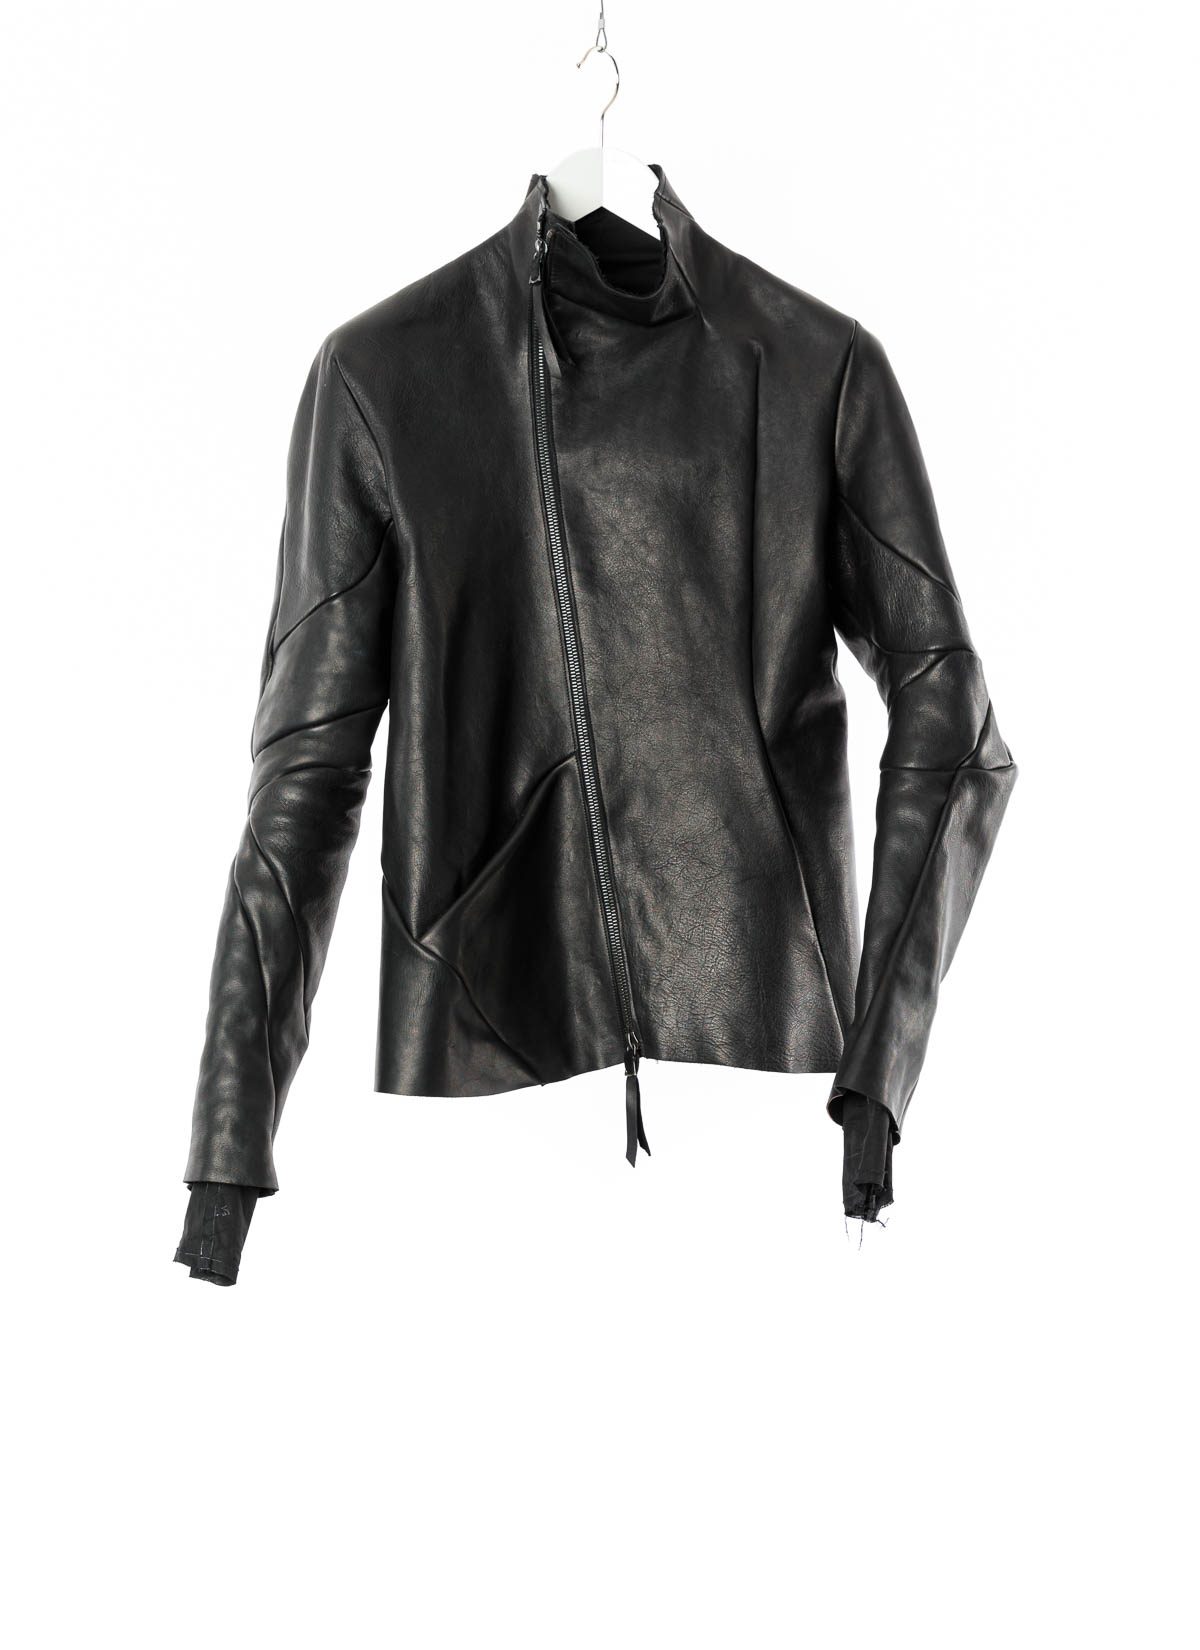 LEON EMANUEL BLANCK Classic Distortion L Jacket, black, horse leather